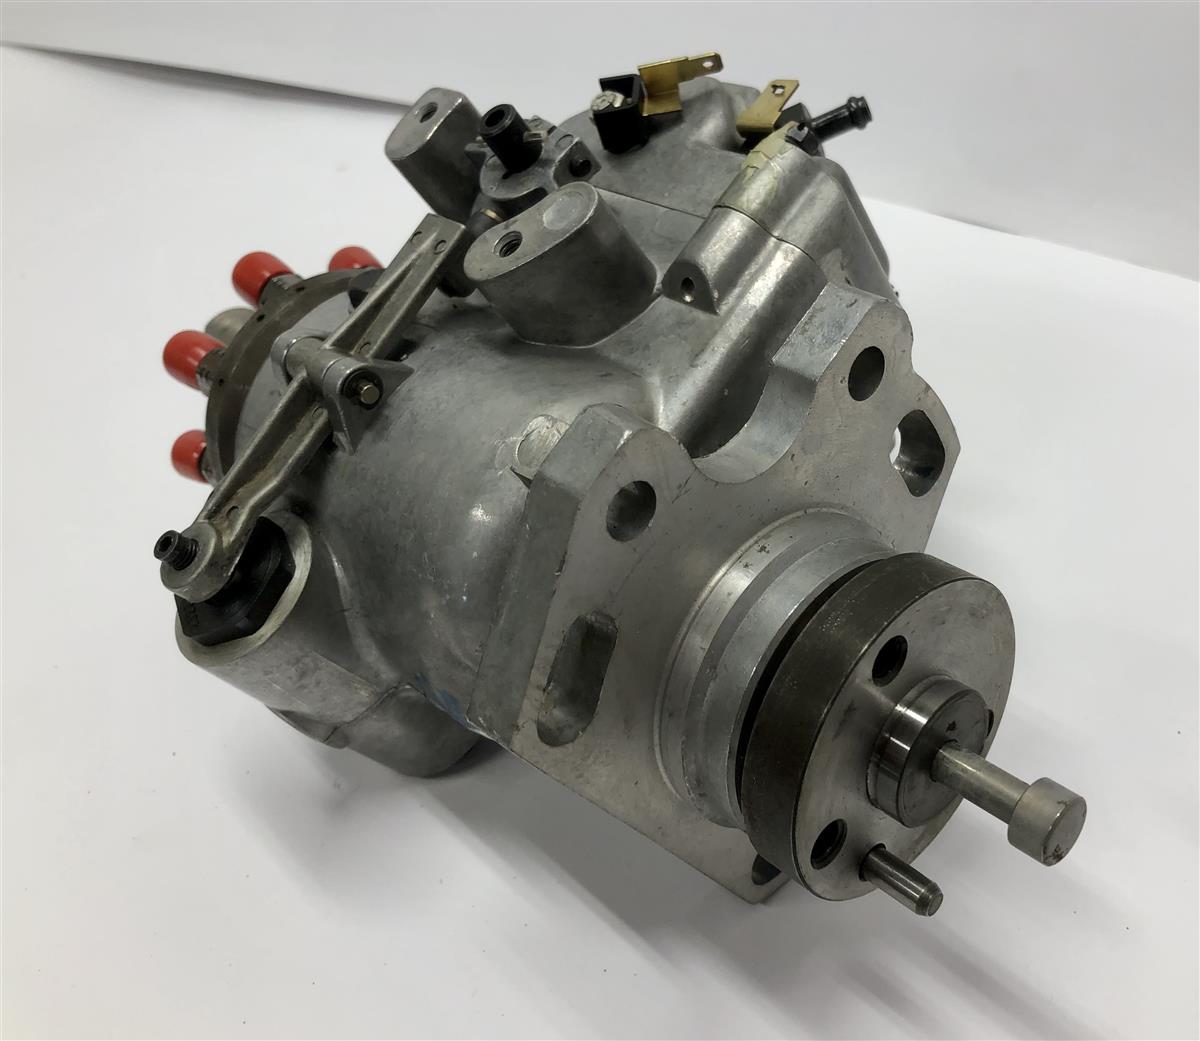 SP-2904 | SP-2904 Fuel Injection Pump 6.2 Liter Diesel CUCV (3).jpeg